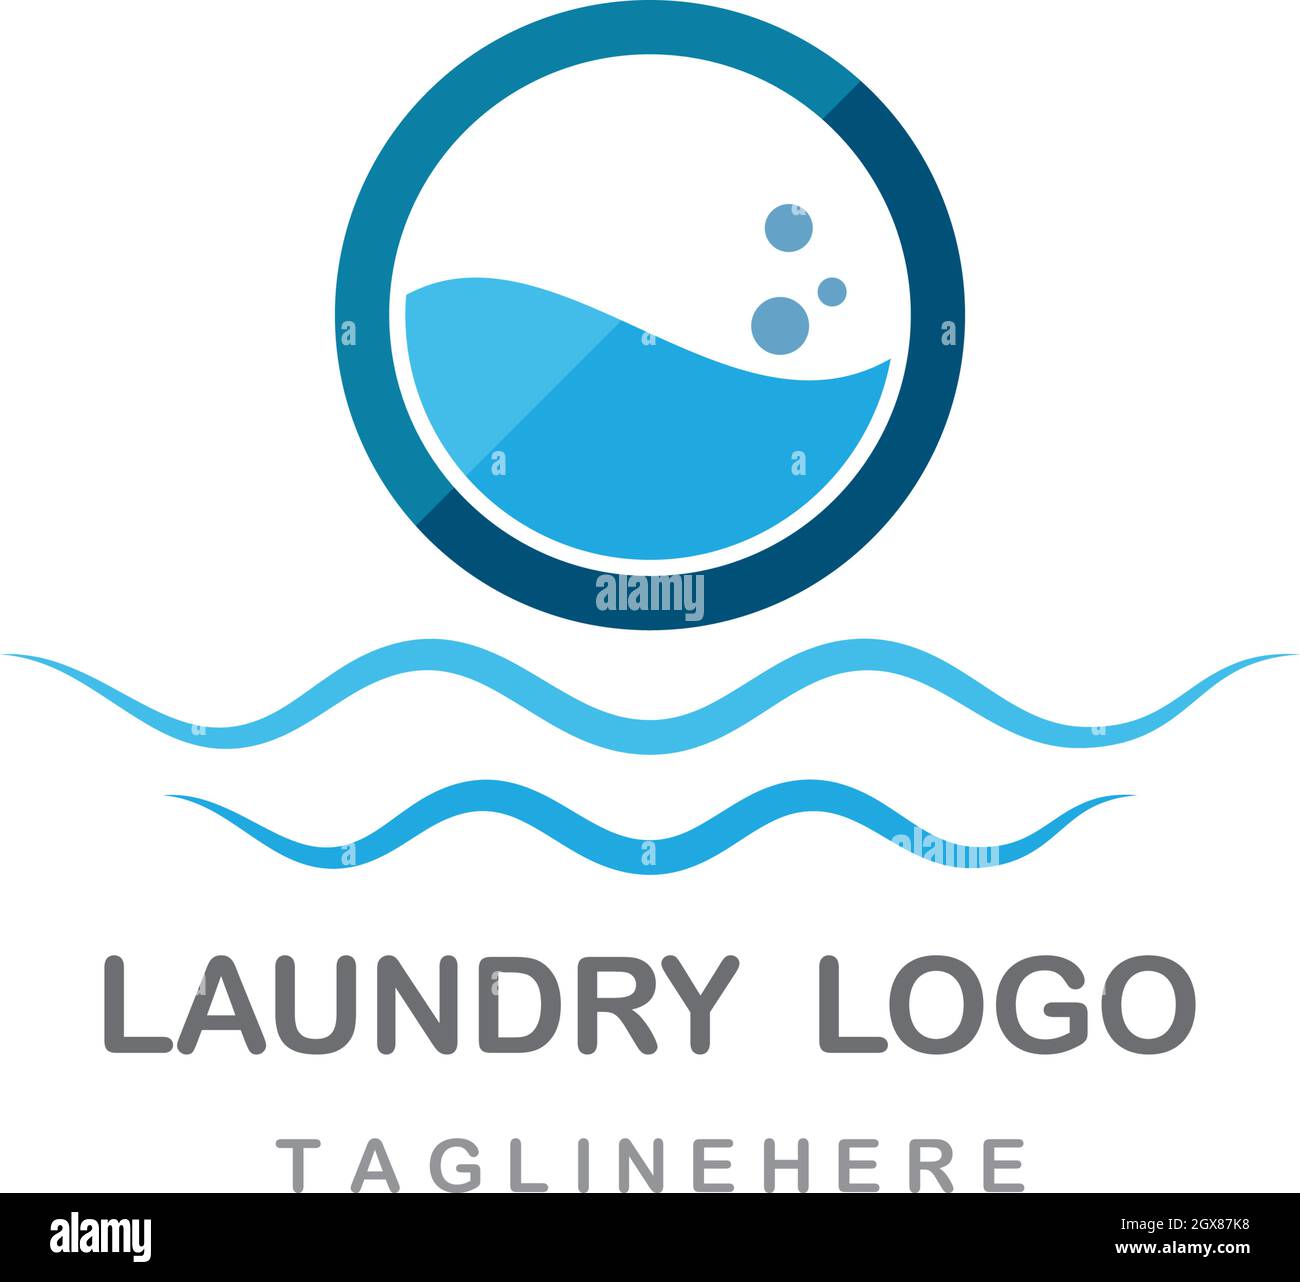 Laundry logo vector icon template Stock Vector